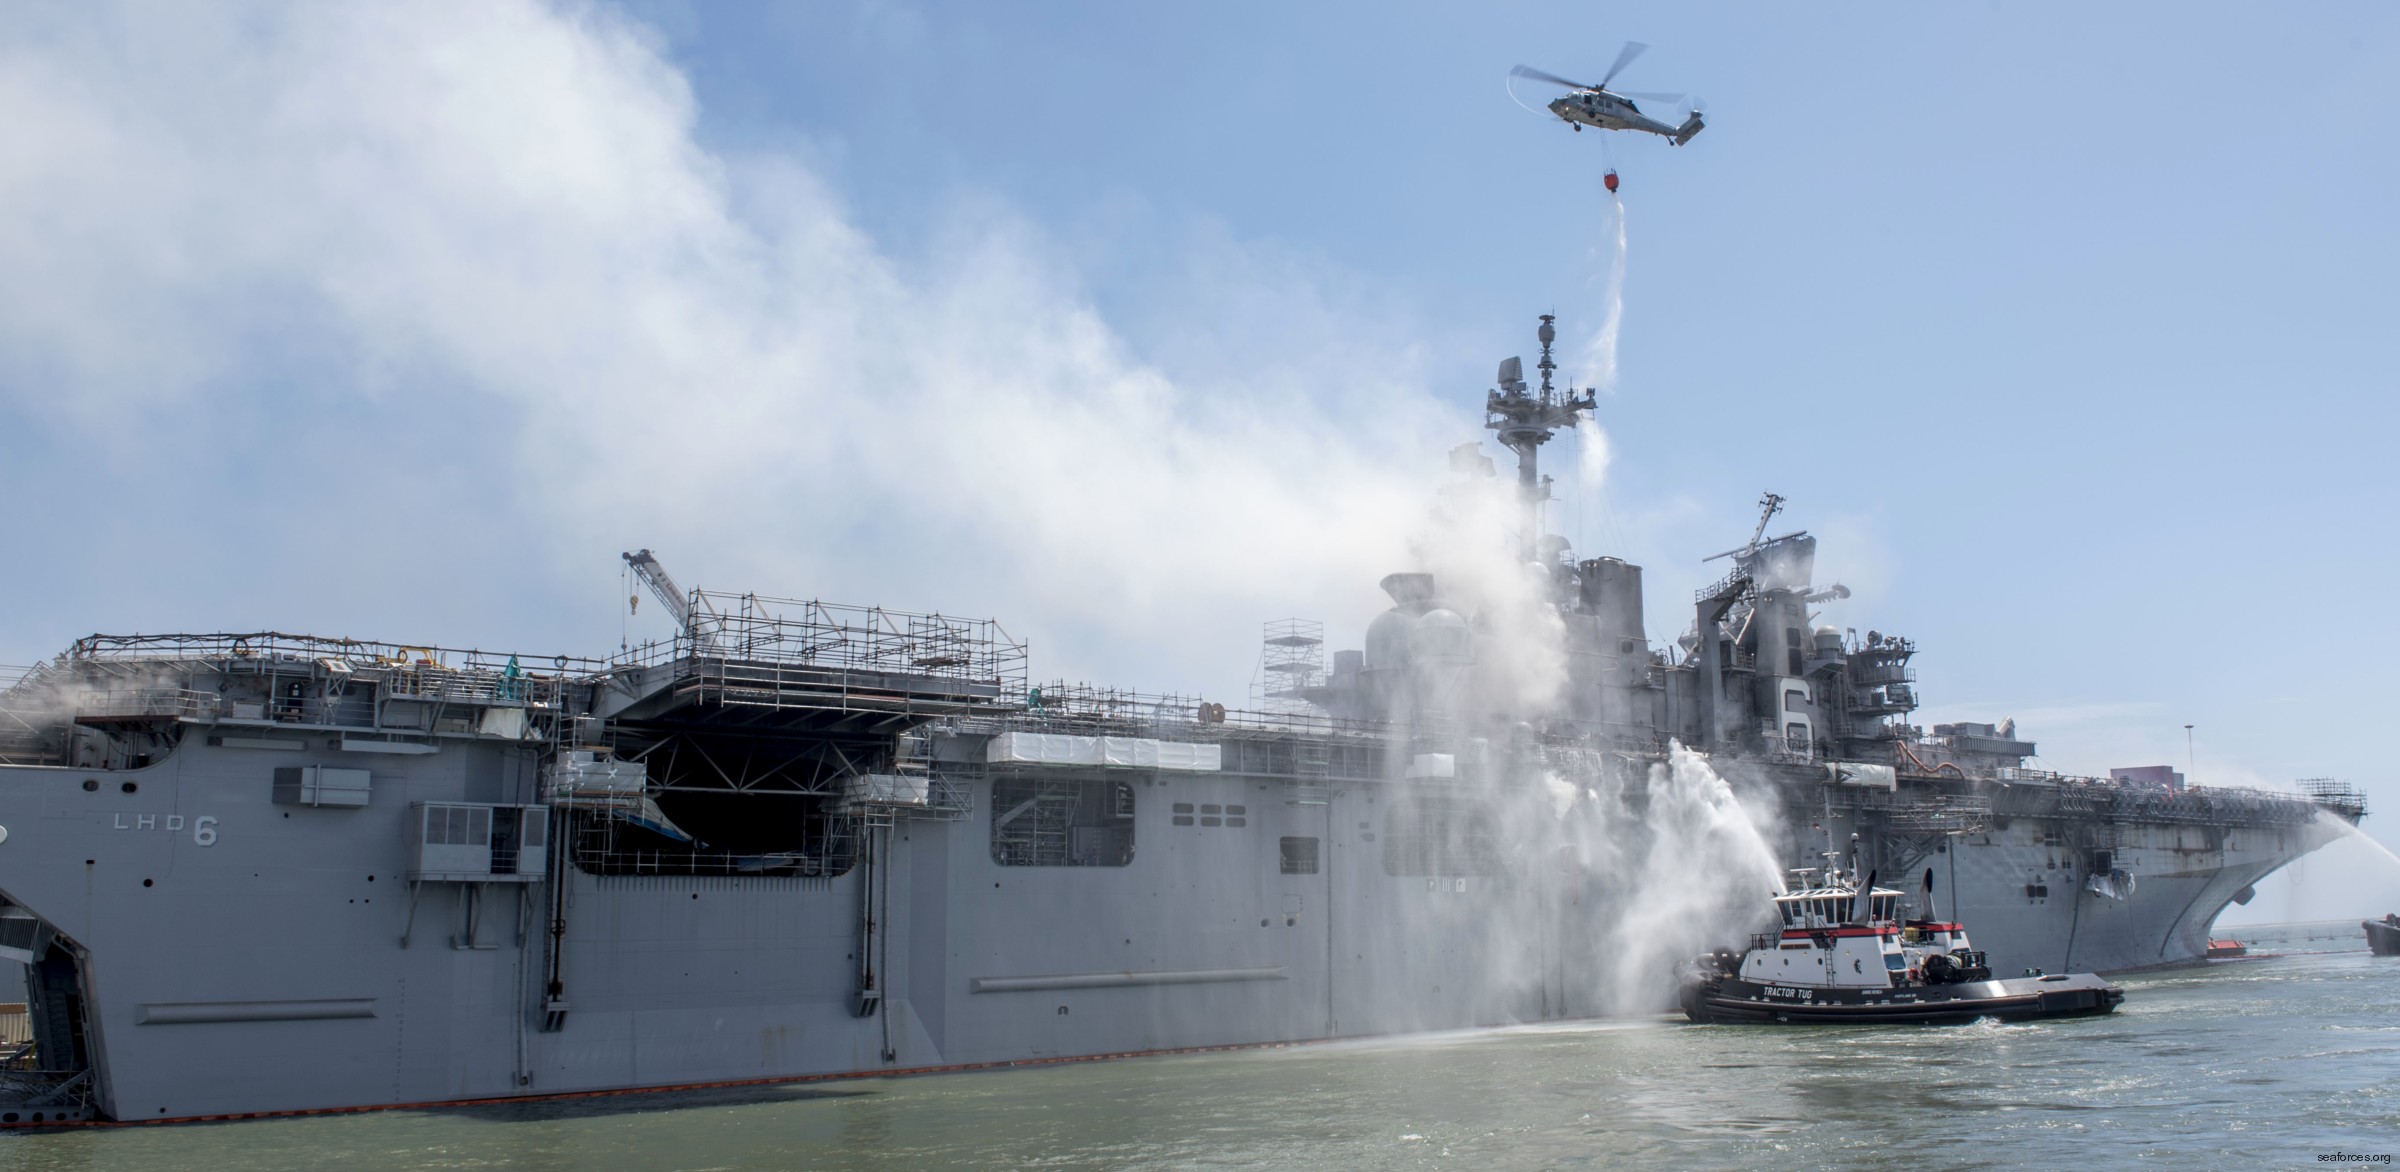 uss bonhomme richard lhd-6 fire naval base san diego amphibious assault landing ship helicopter dock 41